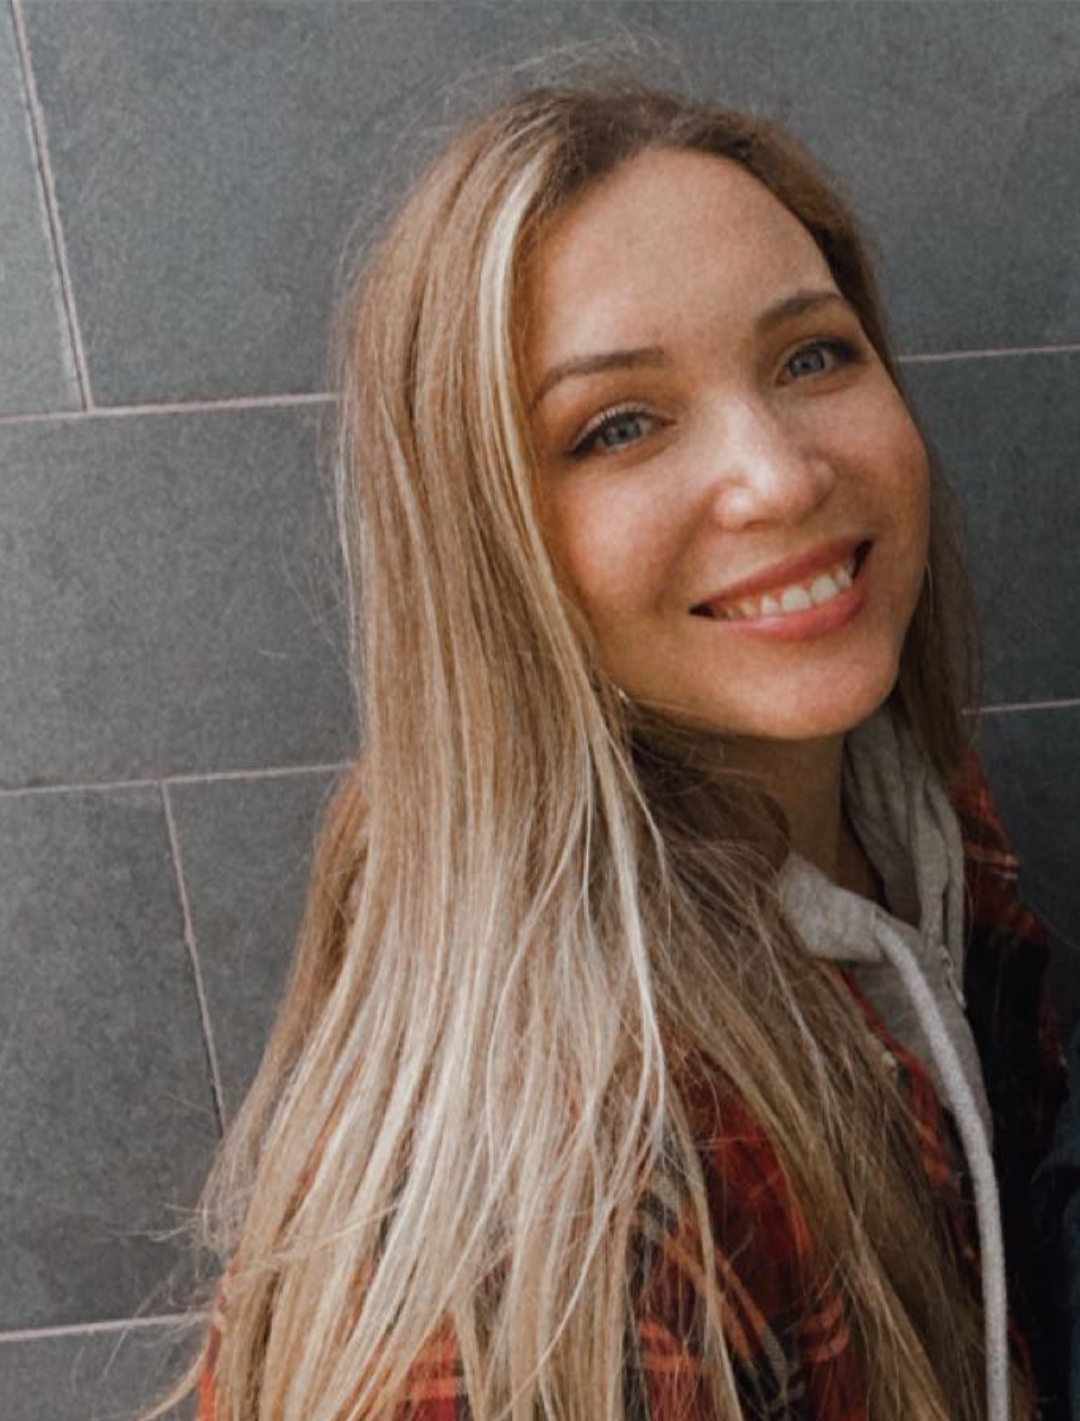 MacKenna Alvarez's headshot. MacKenna is smiling against a gray stone wall, wearing a red plaid flannel jacket and a gray sweatshirt. MacKenna has long straight blonde hair.